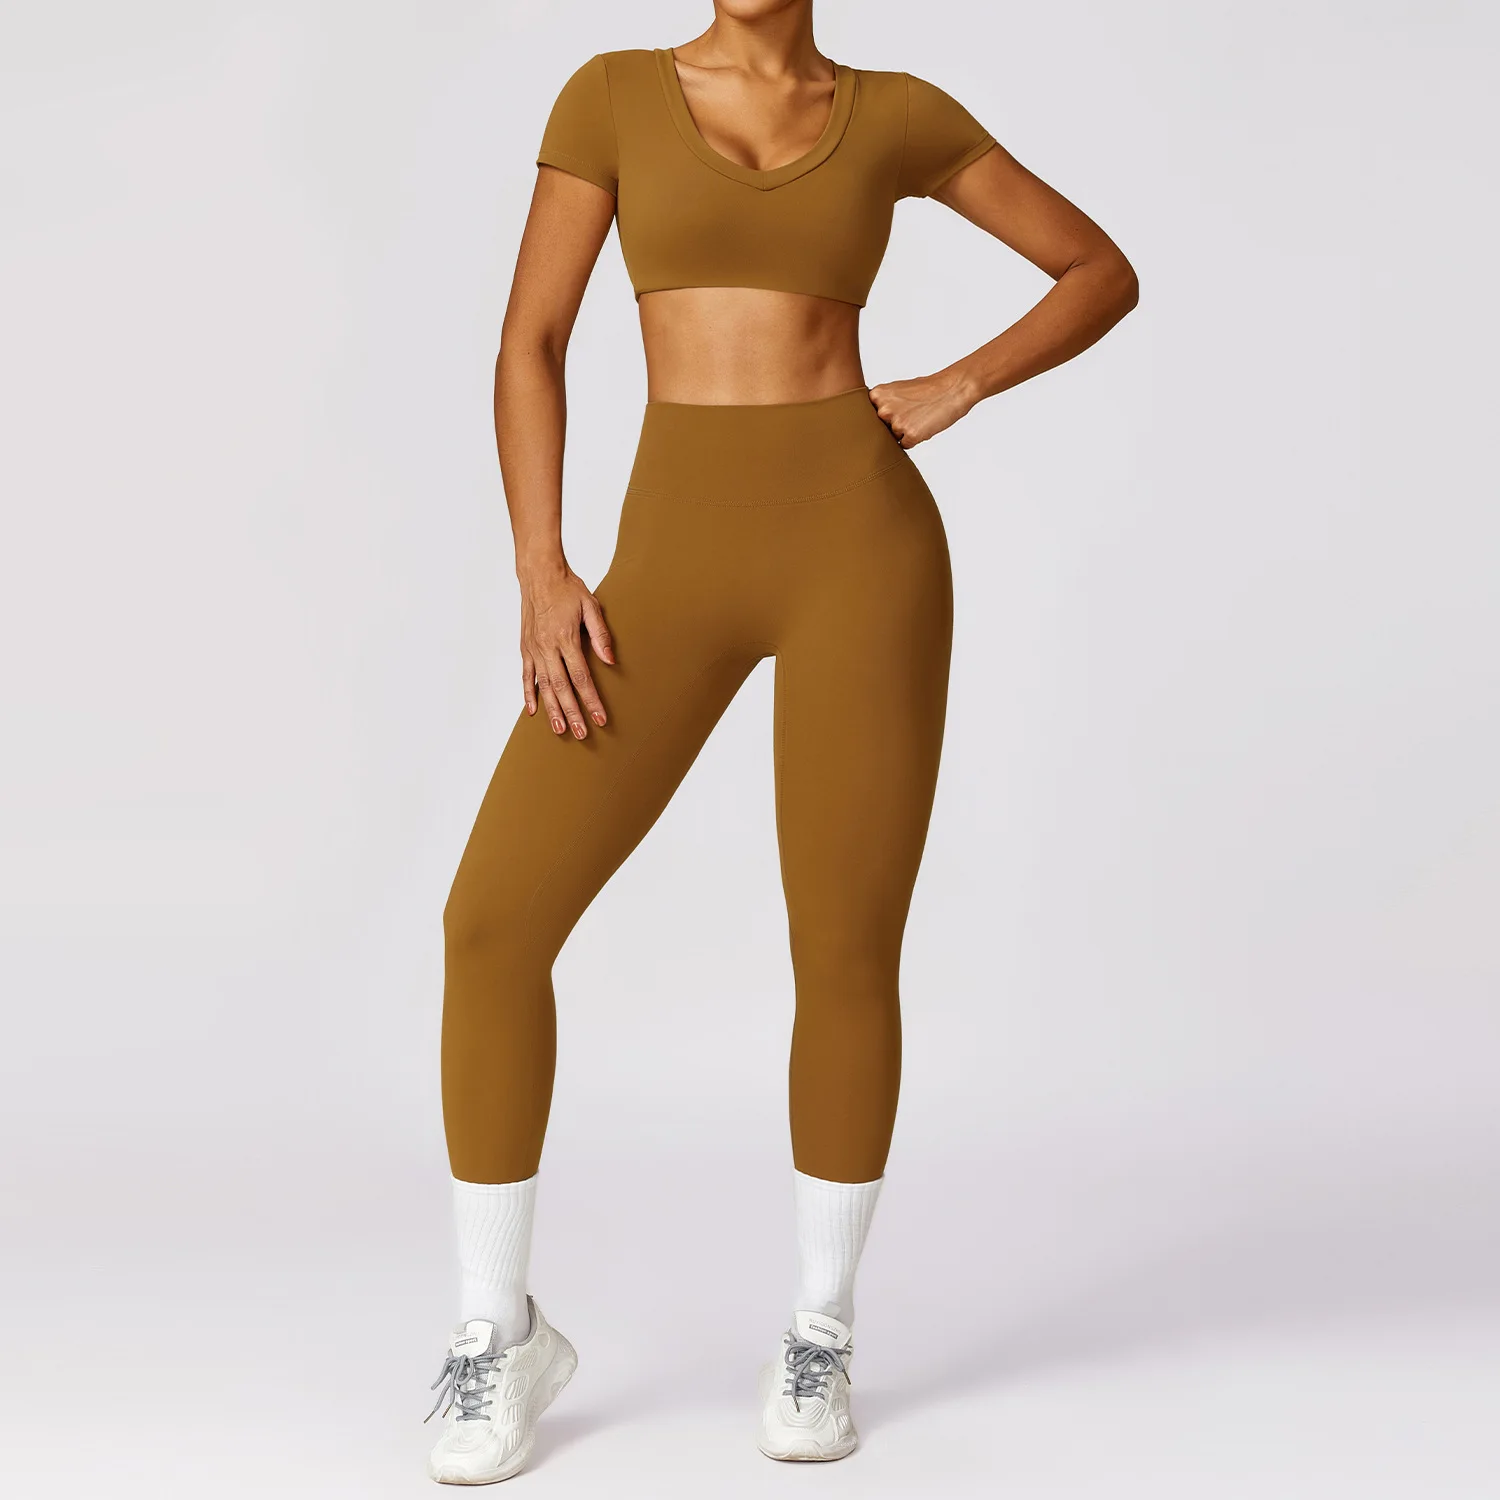 Custom Yoga Legging Set Active Sport wear Fitness Gym Sportswear Women 2 Piece Crop Top And Leggings Set